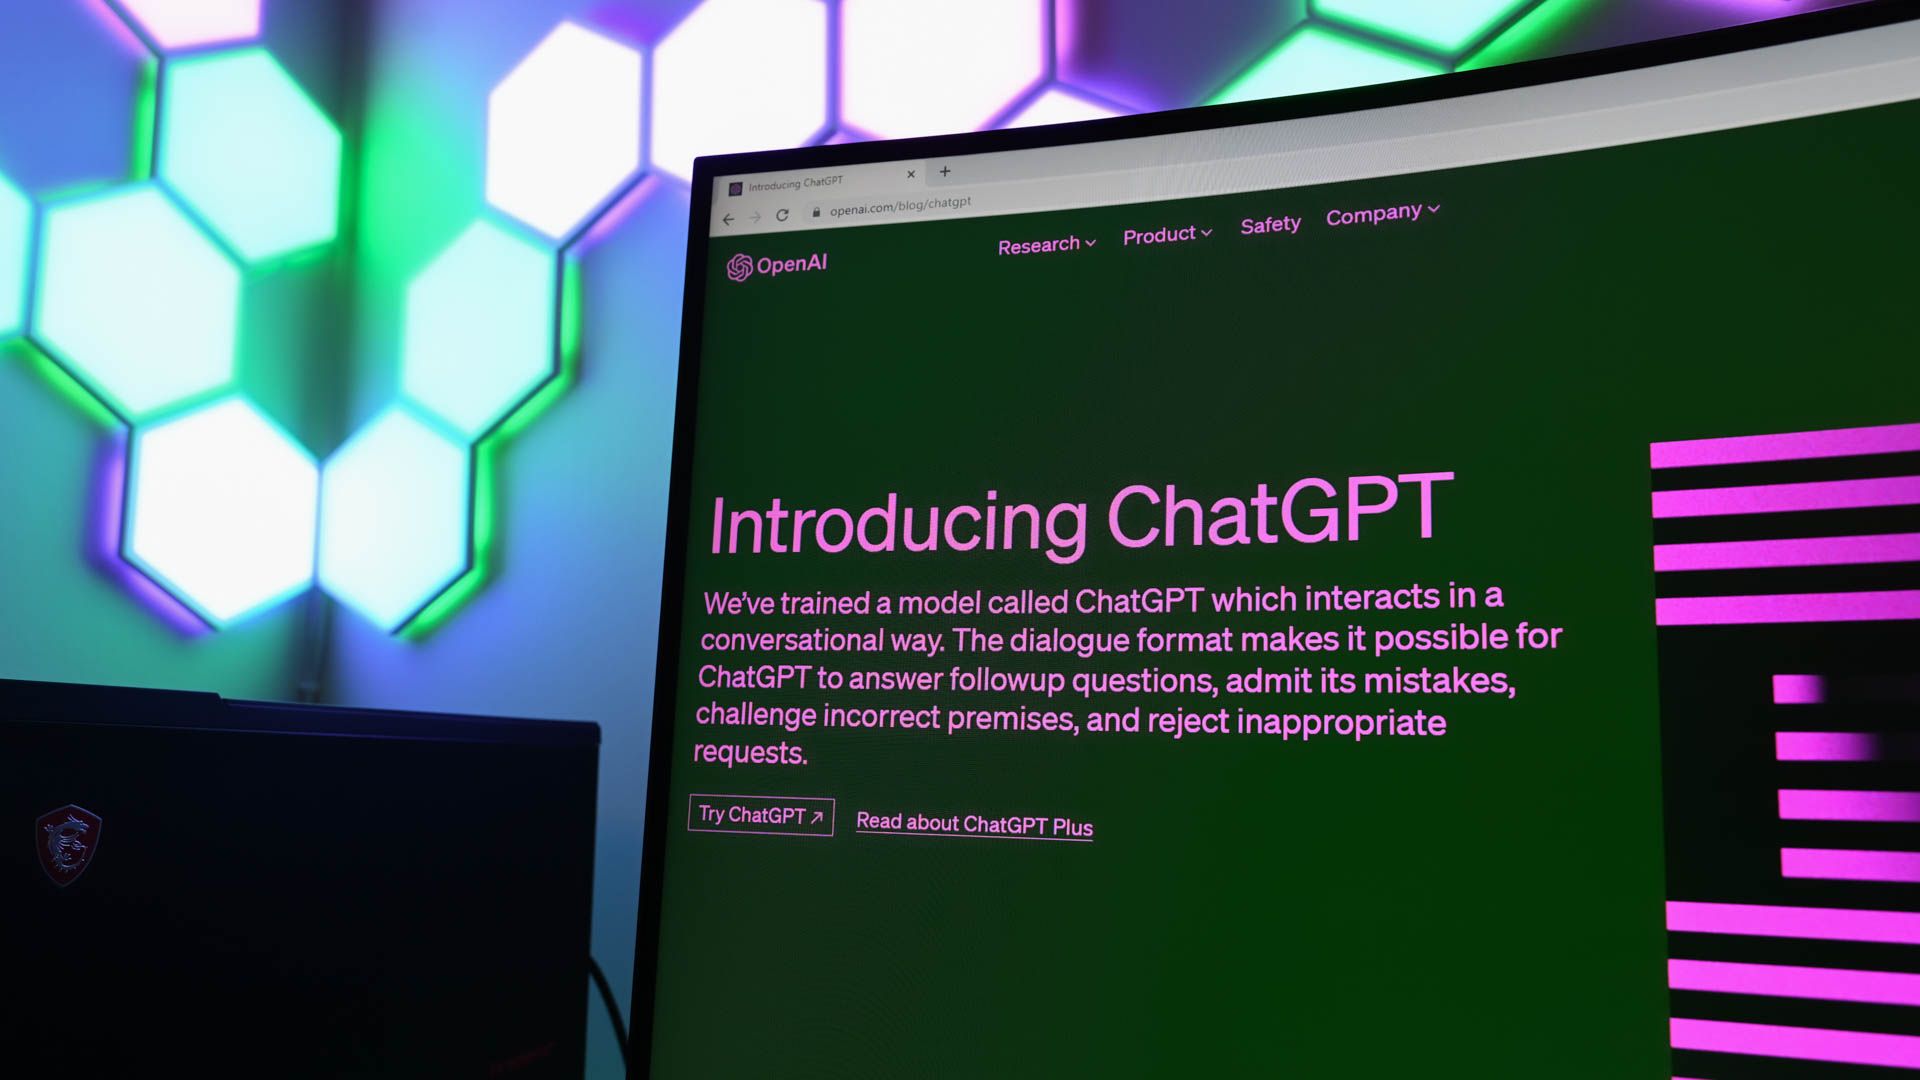 Introducing ChatGPT.